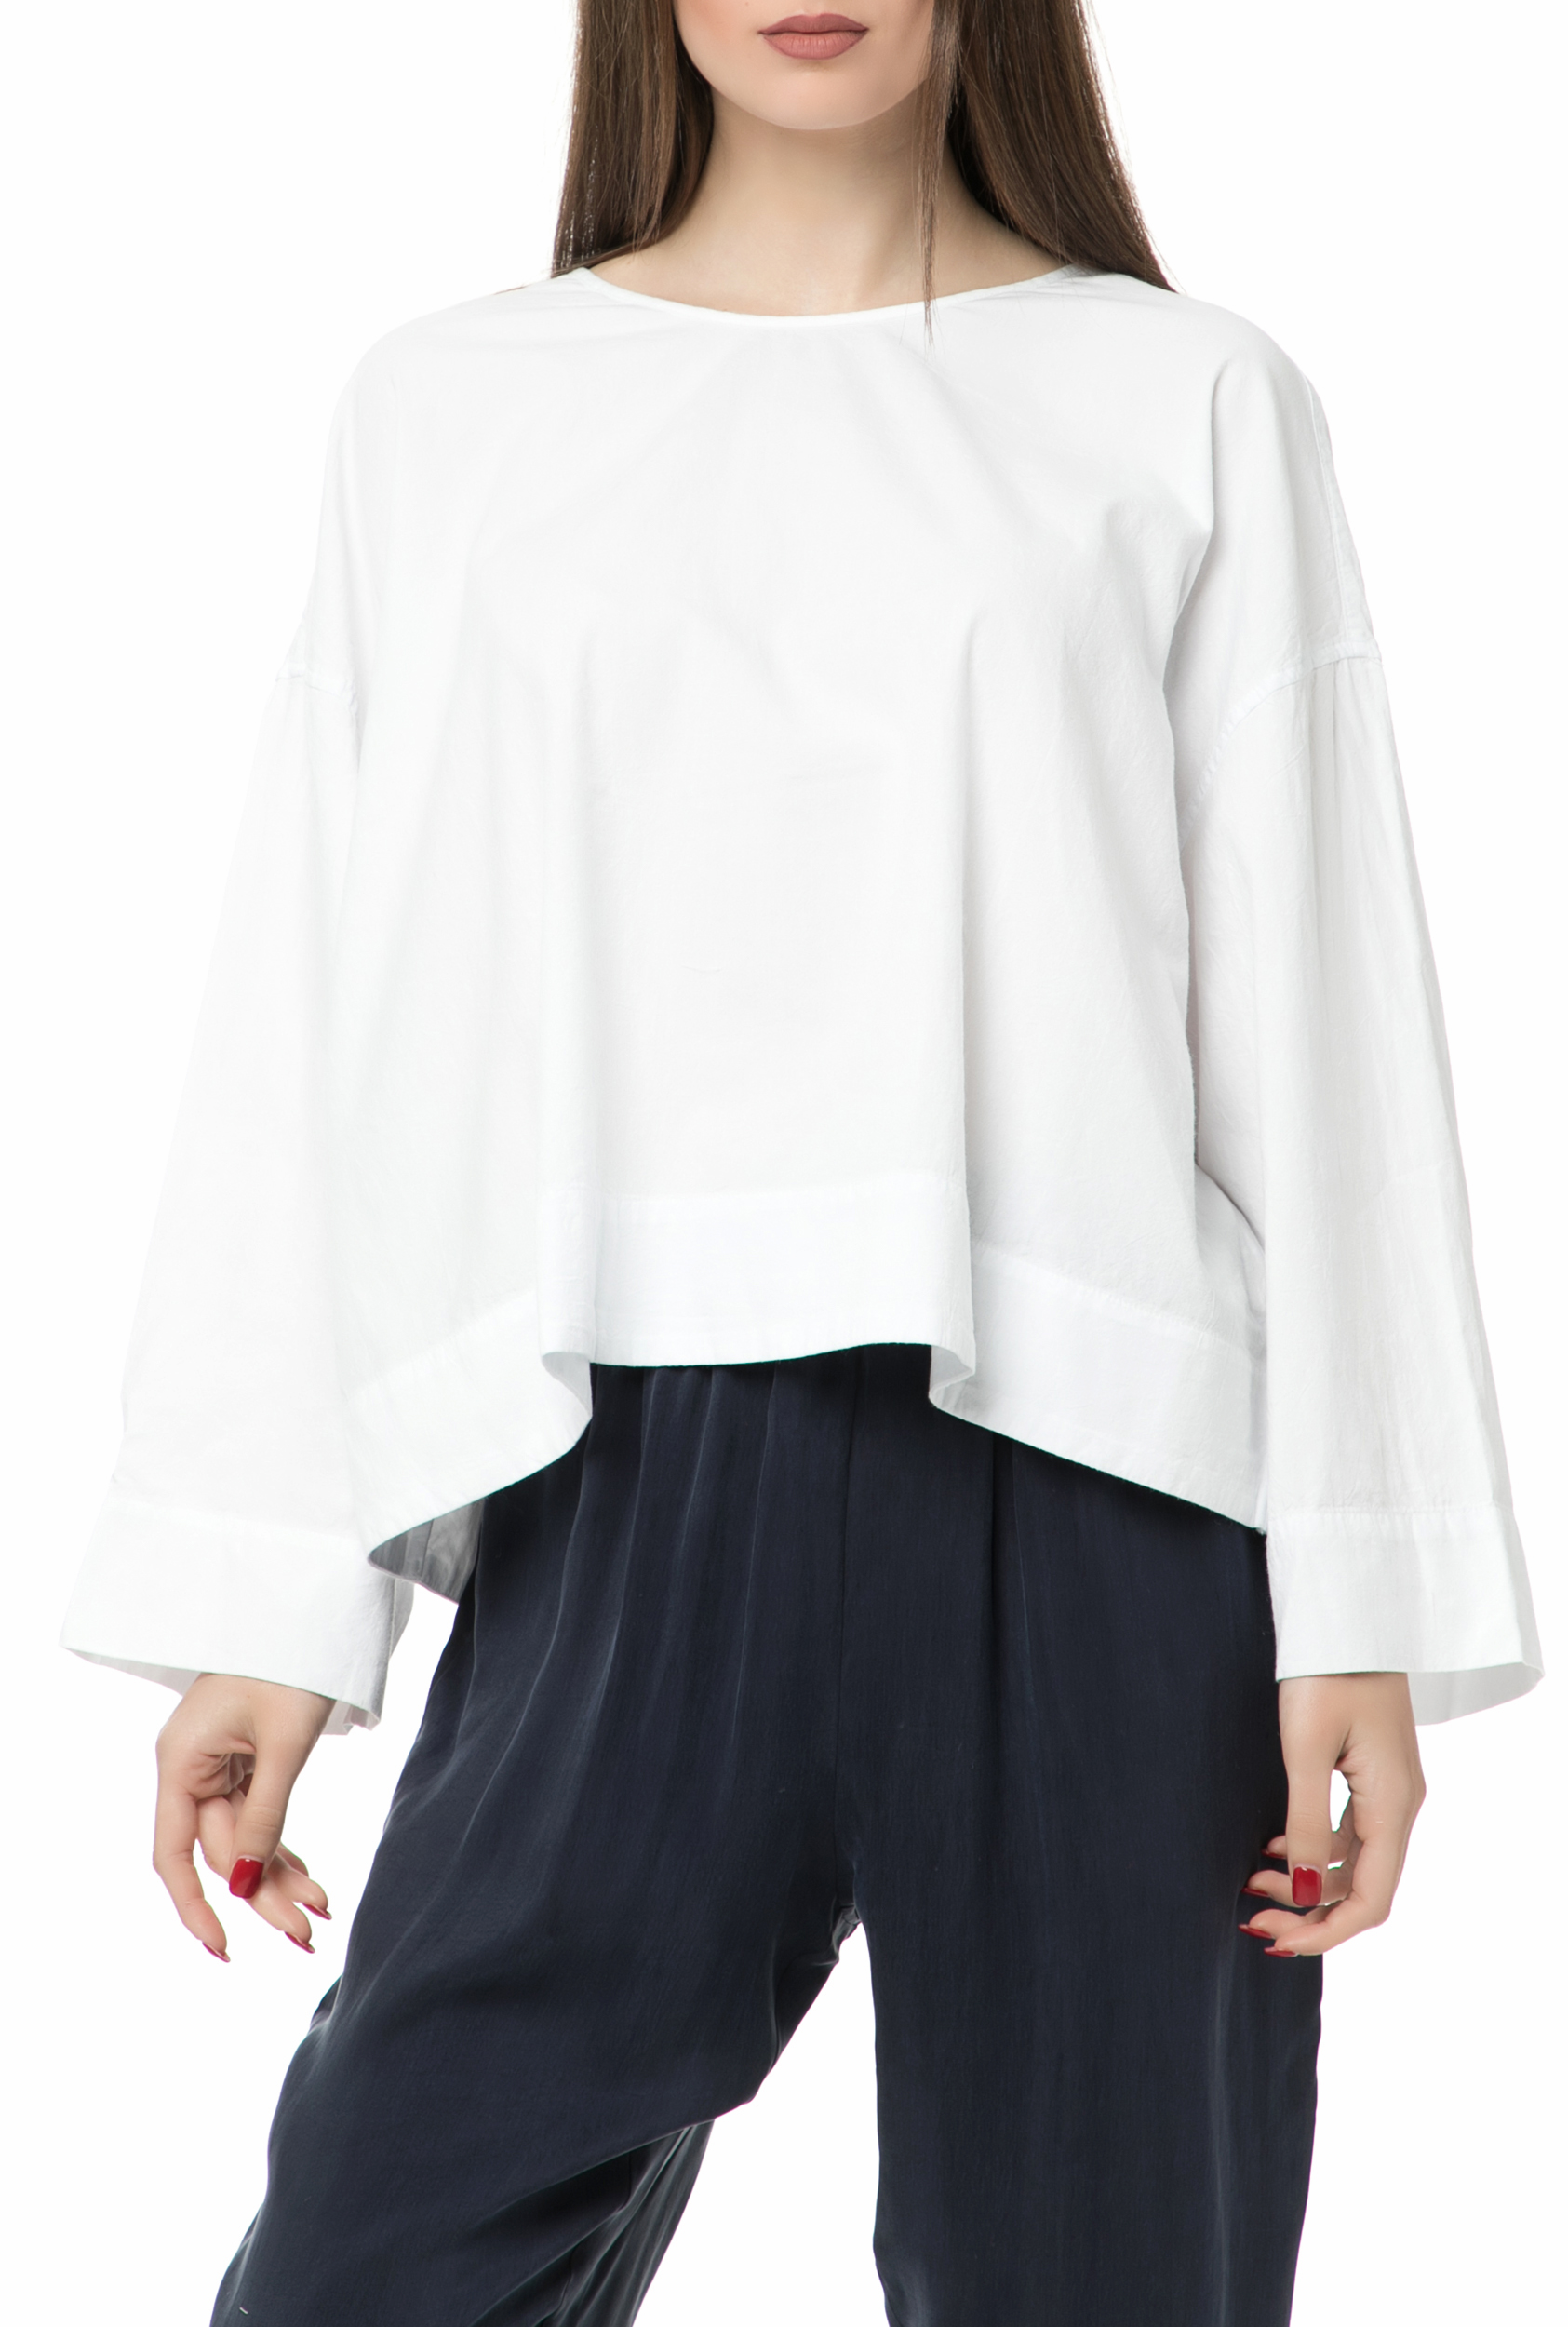 AMERICAN VINTAGE - Γυναικεία μακρυμάνικη μπλούζα AMERICAN VINTAGE λευκή Γυναικεία/Ρούχα/Μπλούζες/Μακρυμάνικες